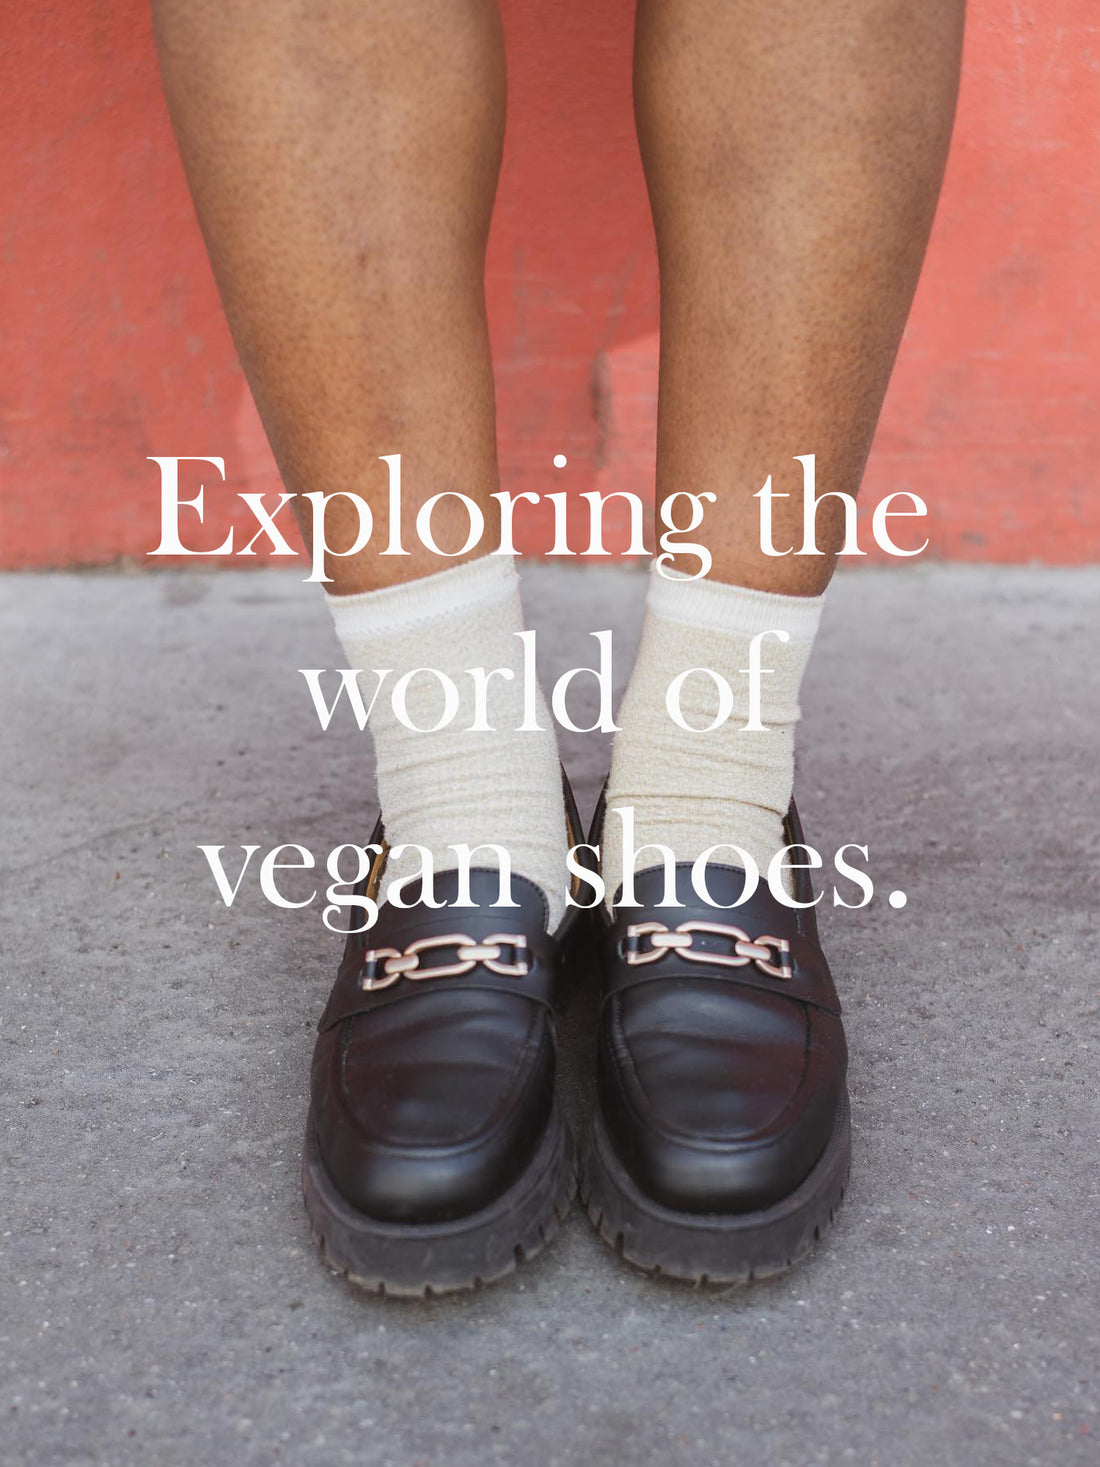 Exploring the world of vegan shoes.